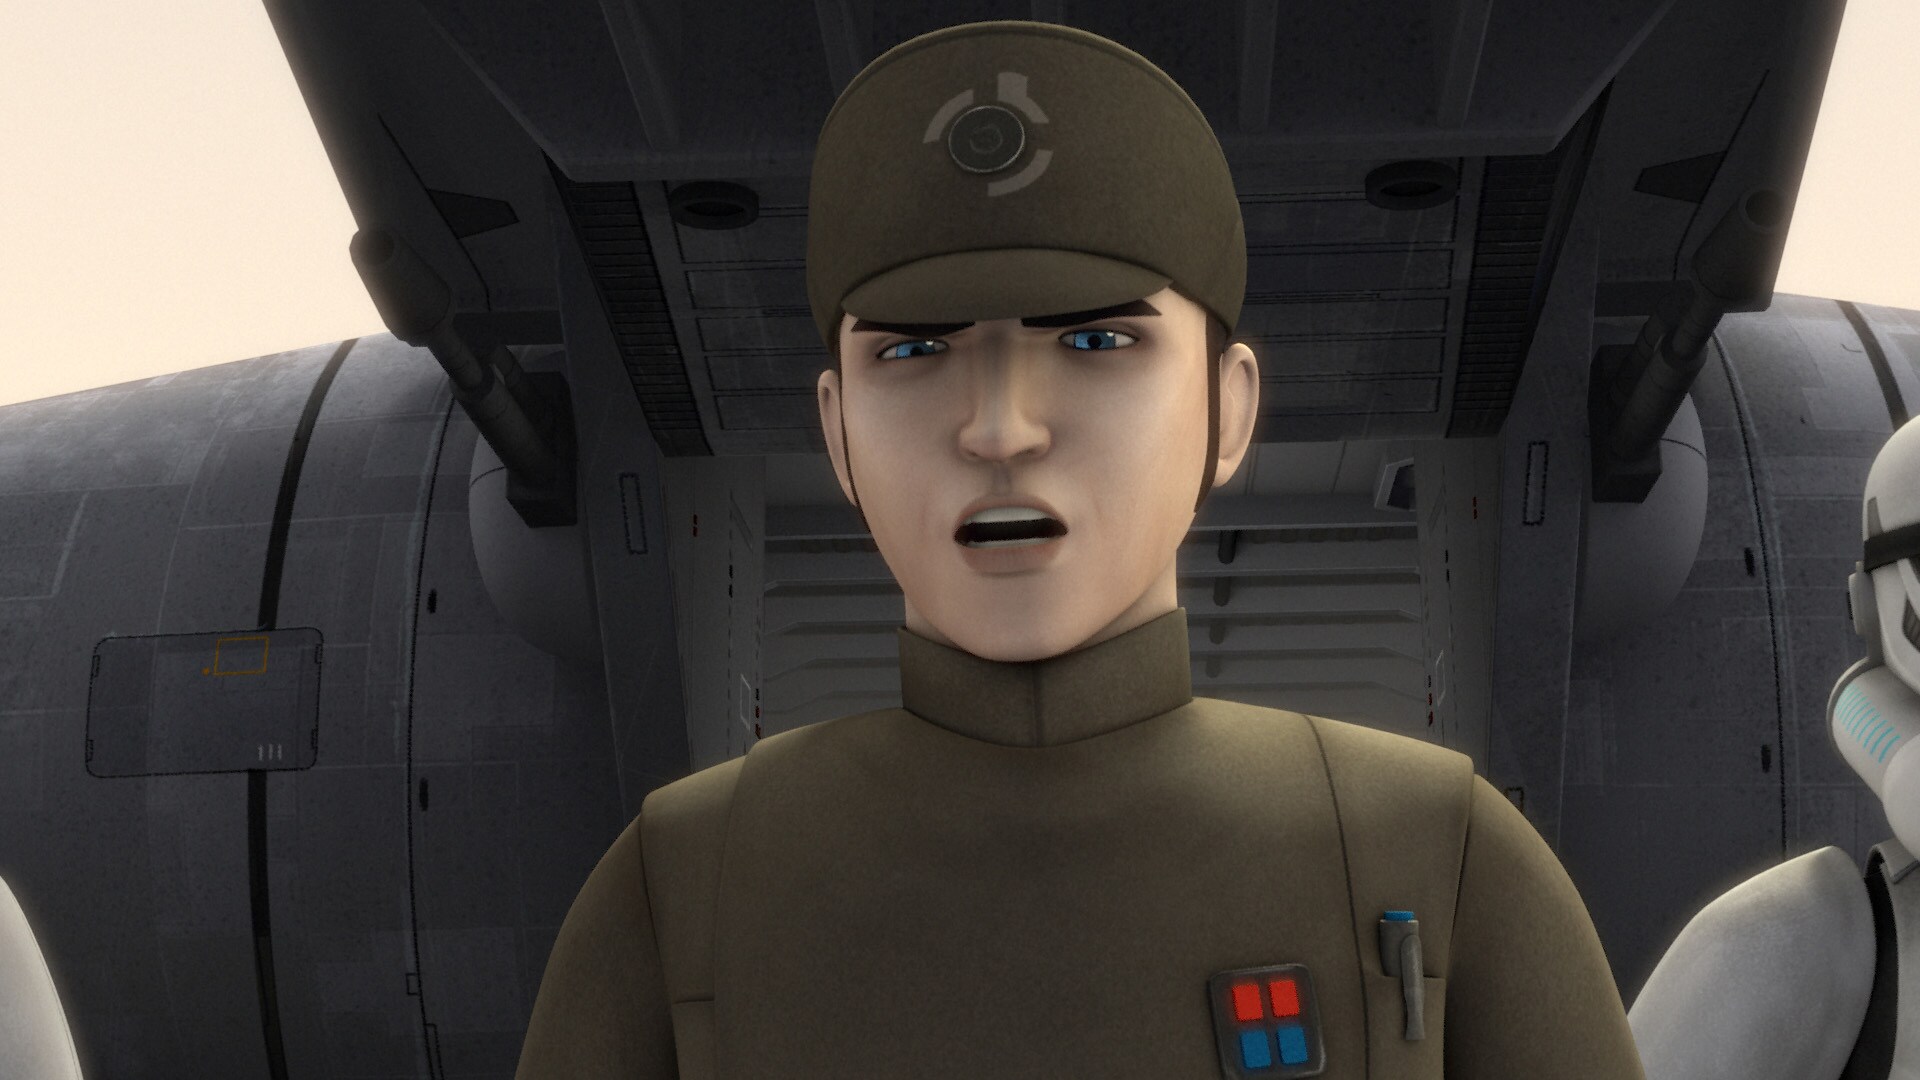 Lieutenant Lyste greets Leia, remarking that Alderaan, like Lothal, has fallen victim to rebel th...